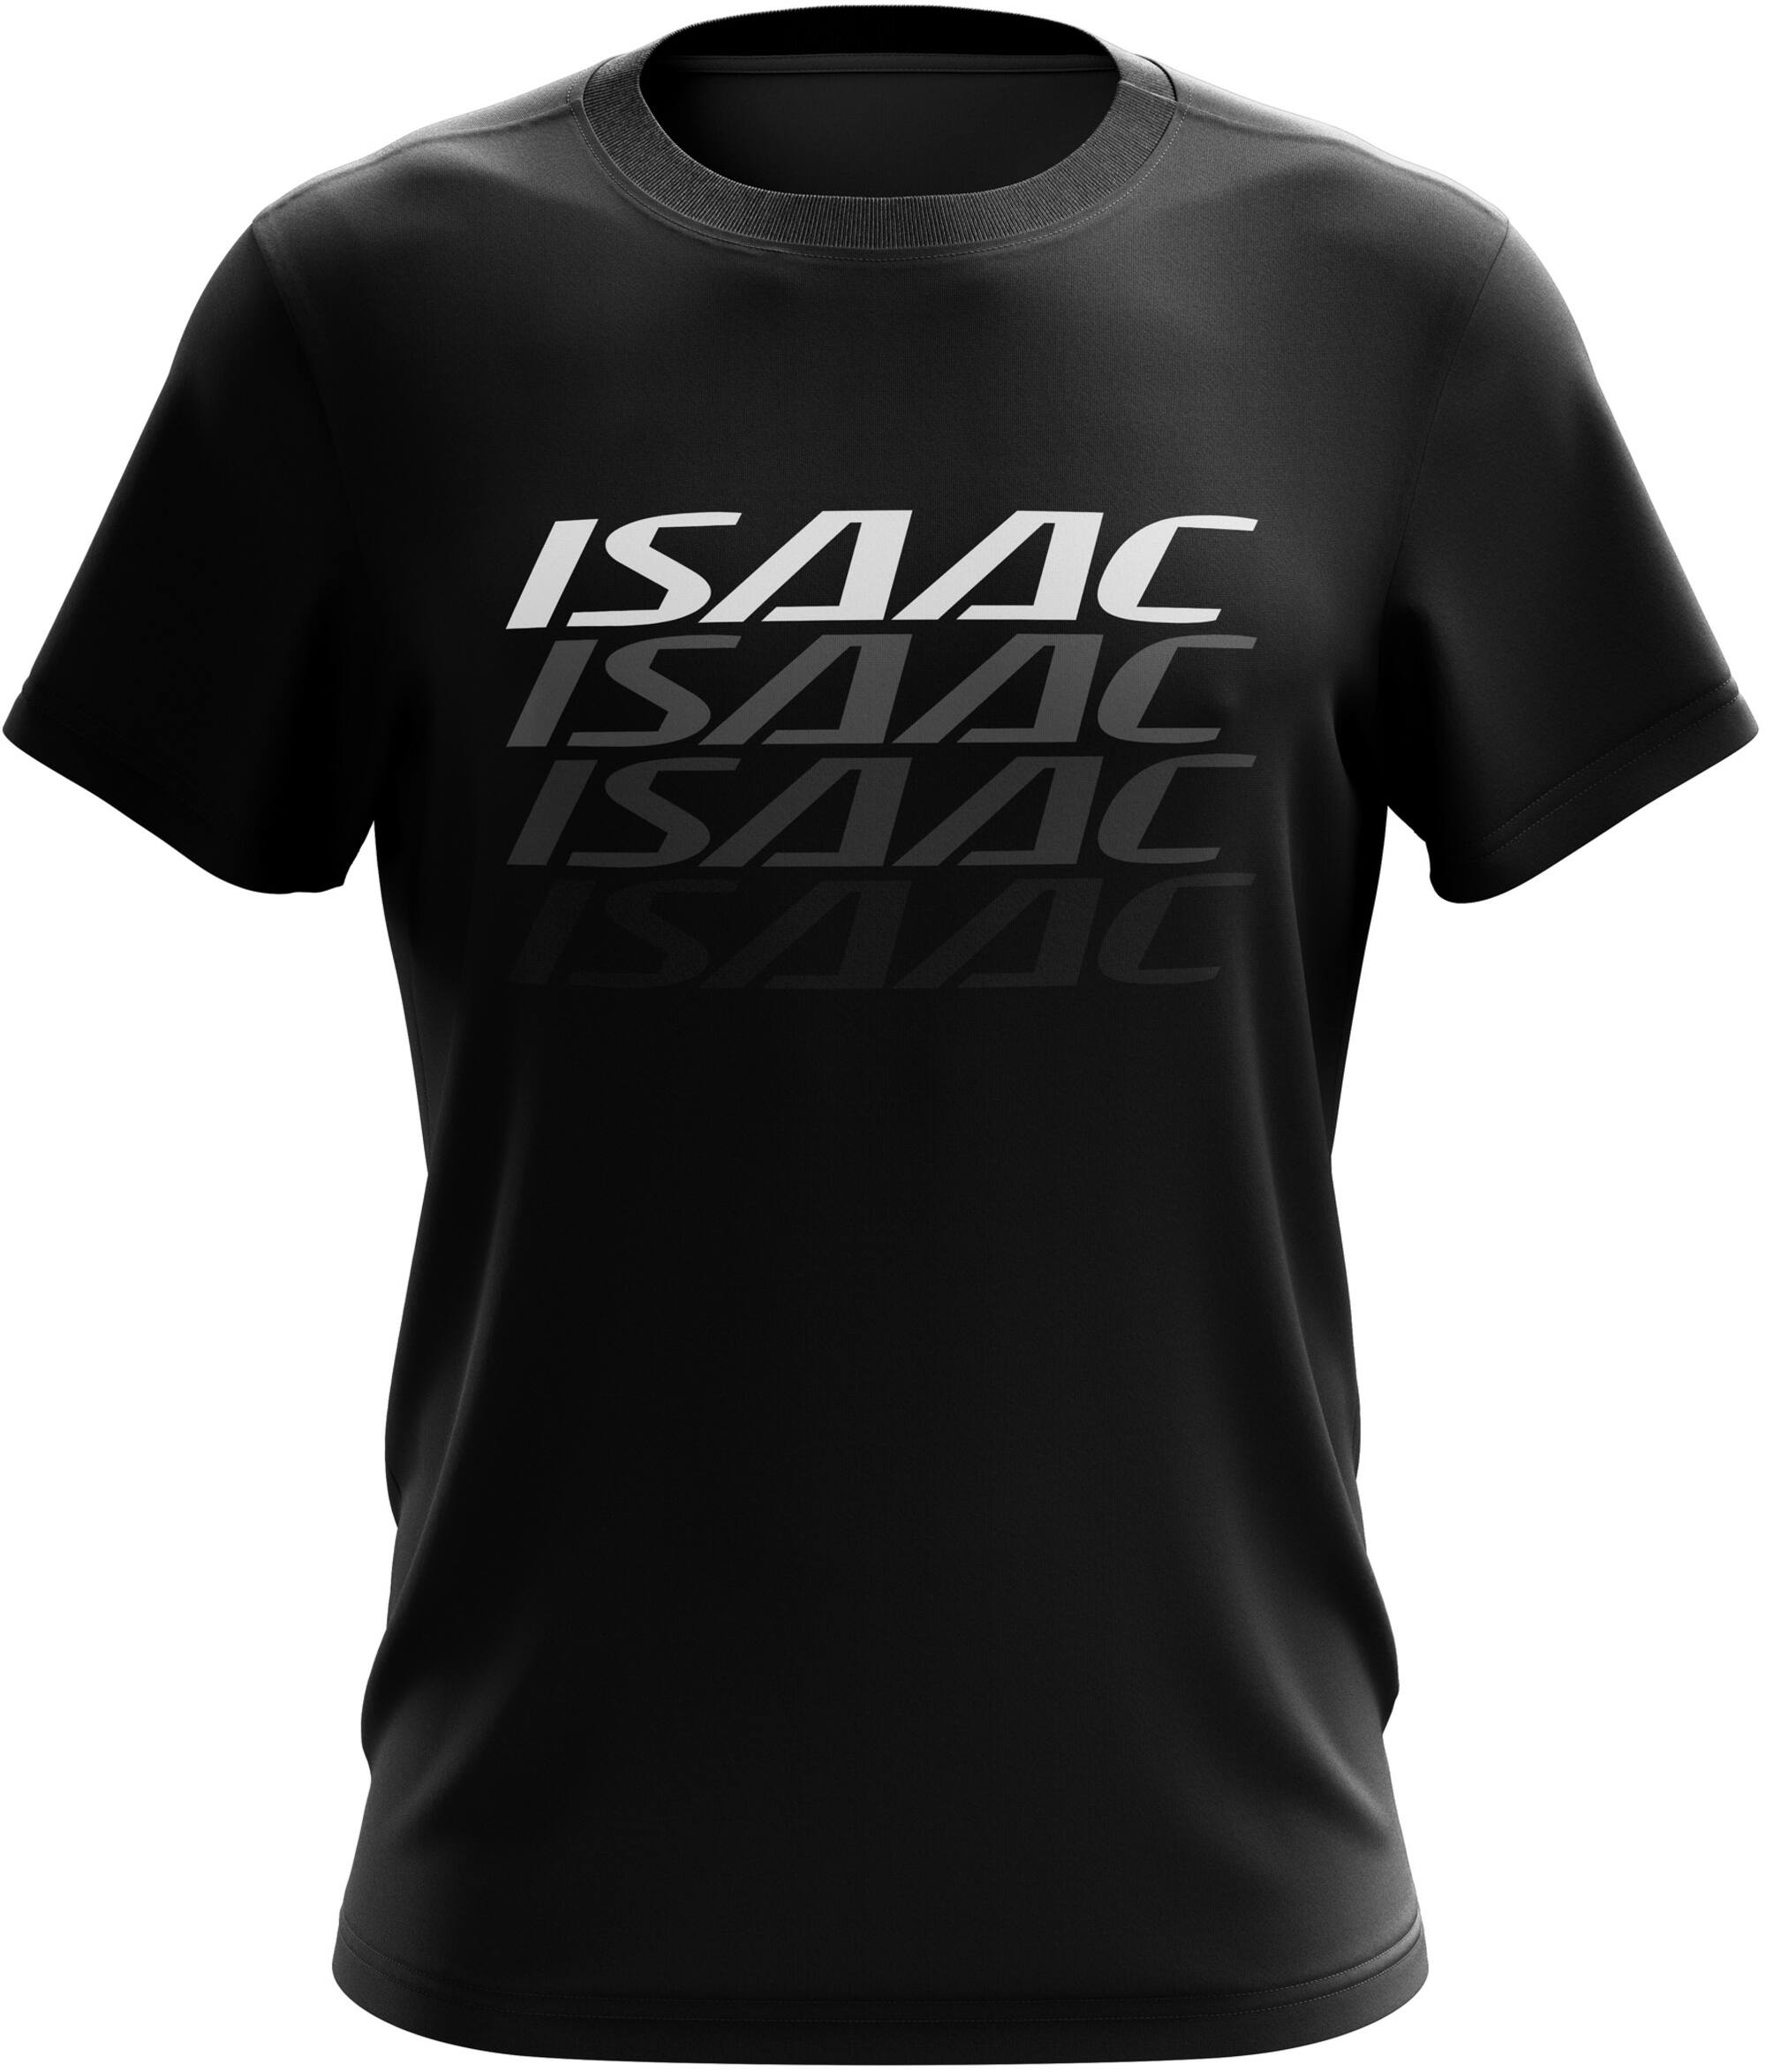 ISAAC T-SHIRT CASUAL MAAT L